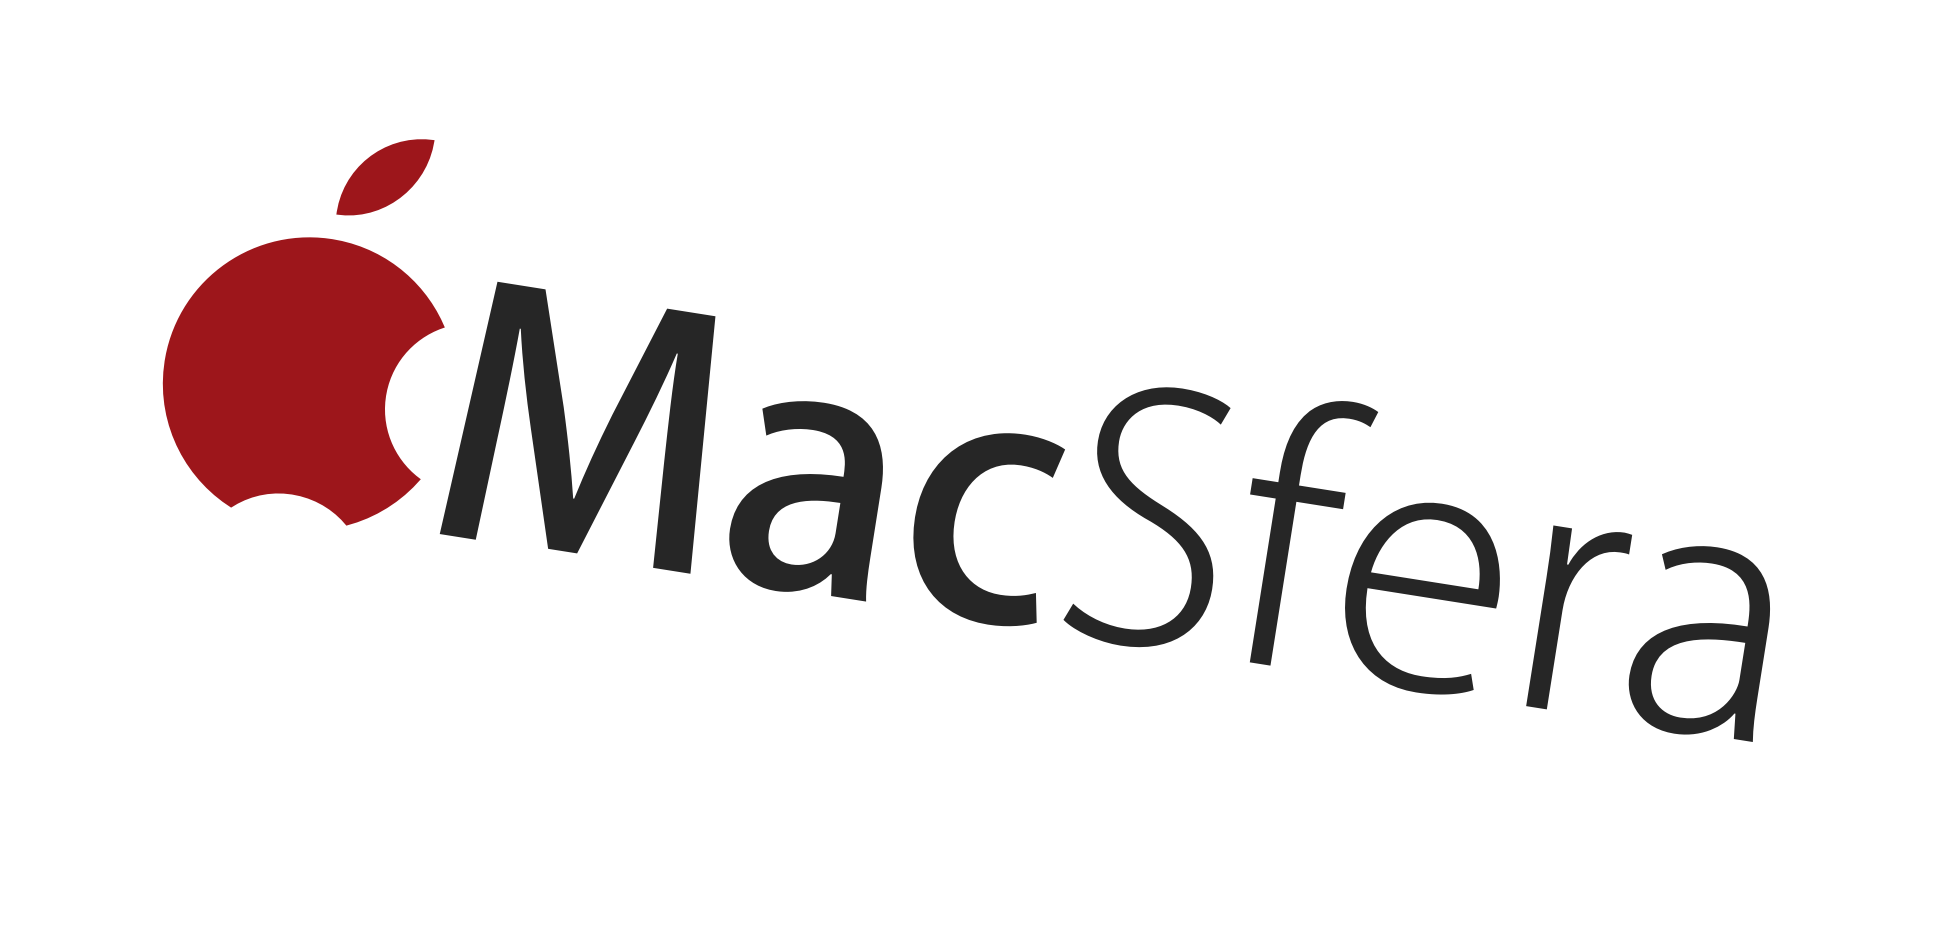 MacSfera